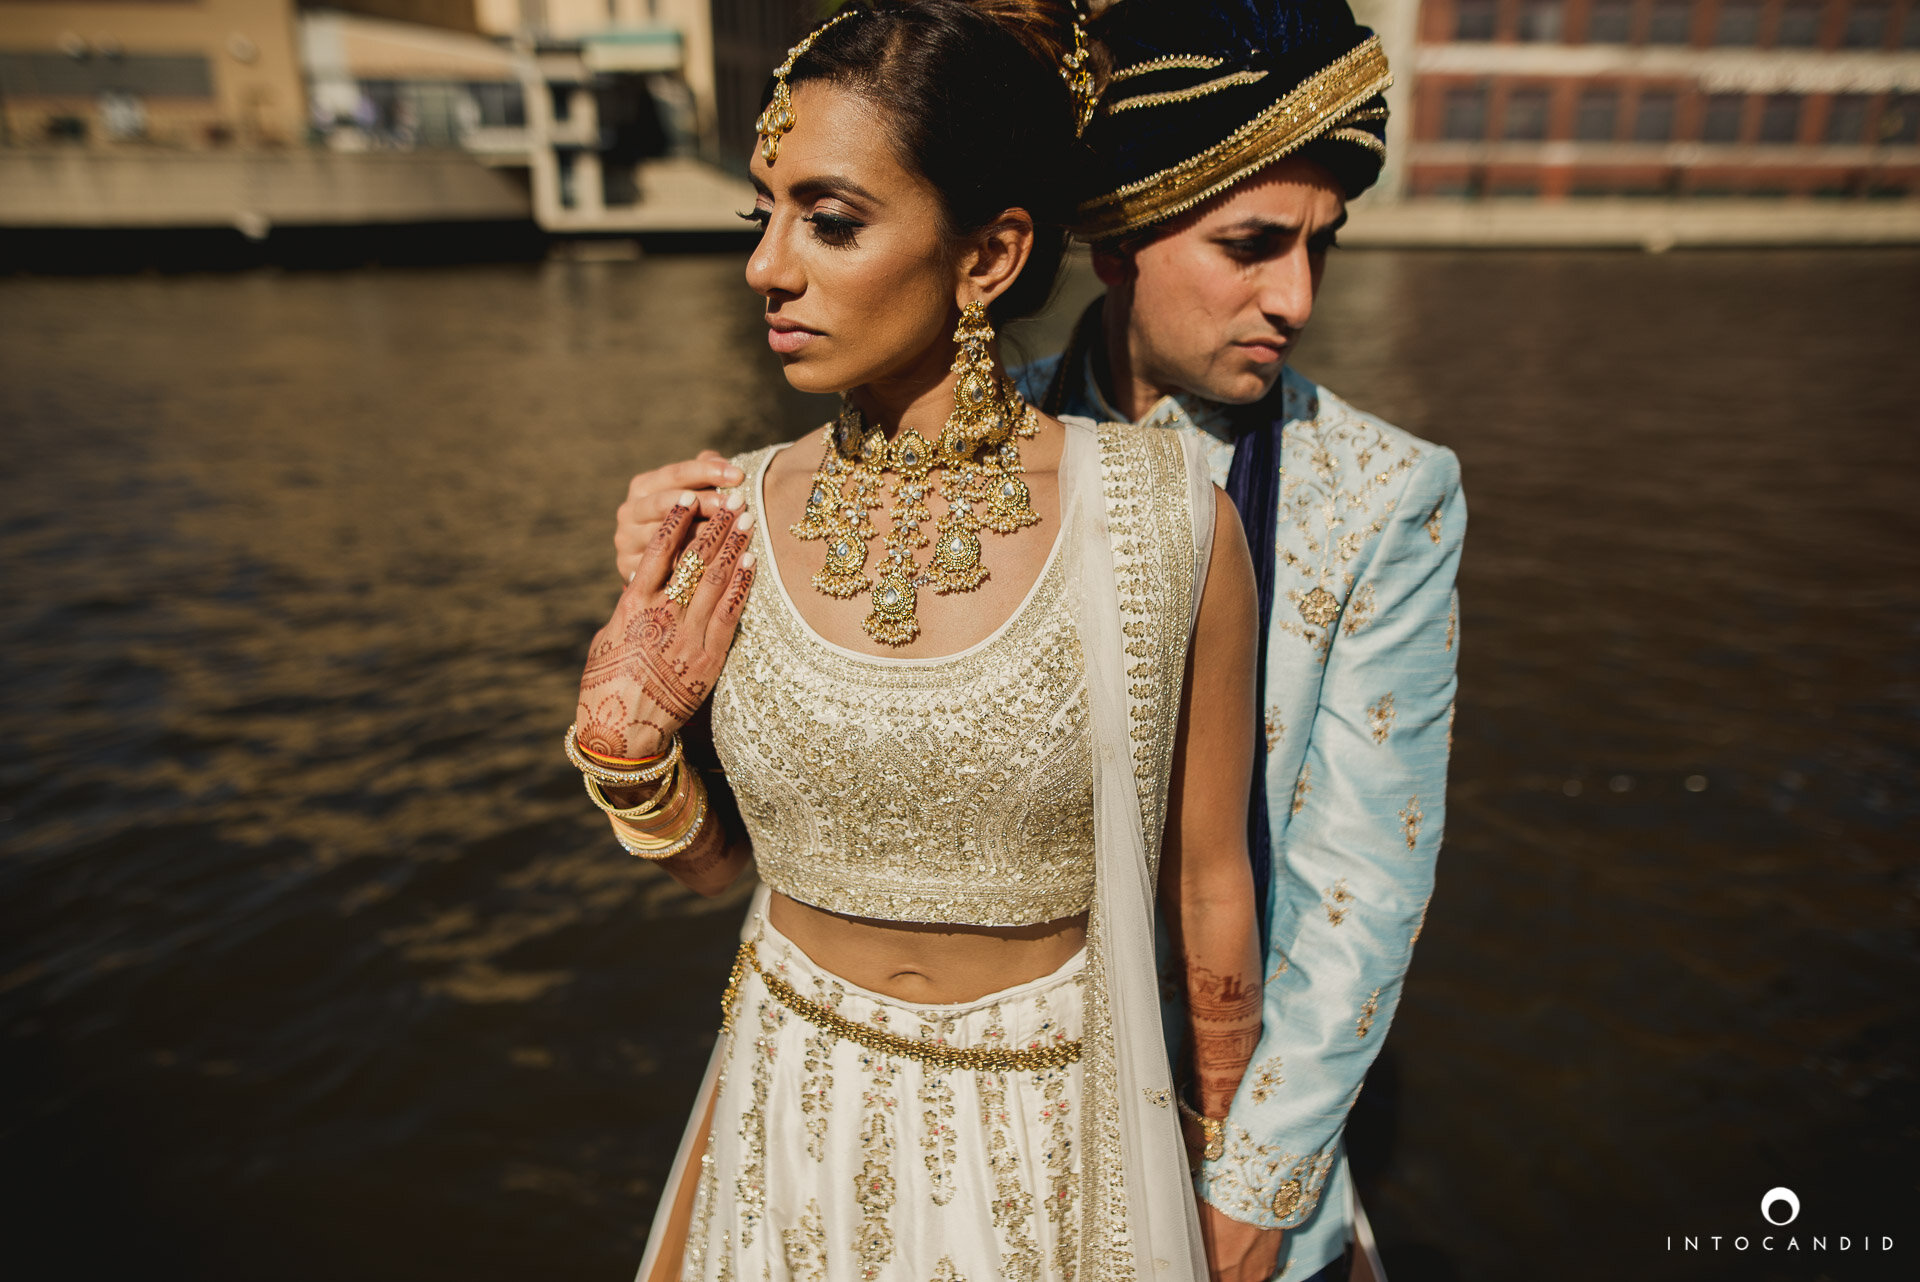 Chicago_Indian_Wedding_Photographer_Intocandid_Photography_Ketan & Manasvi_45.JPG